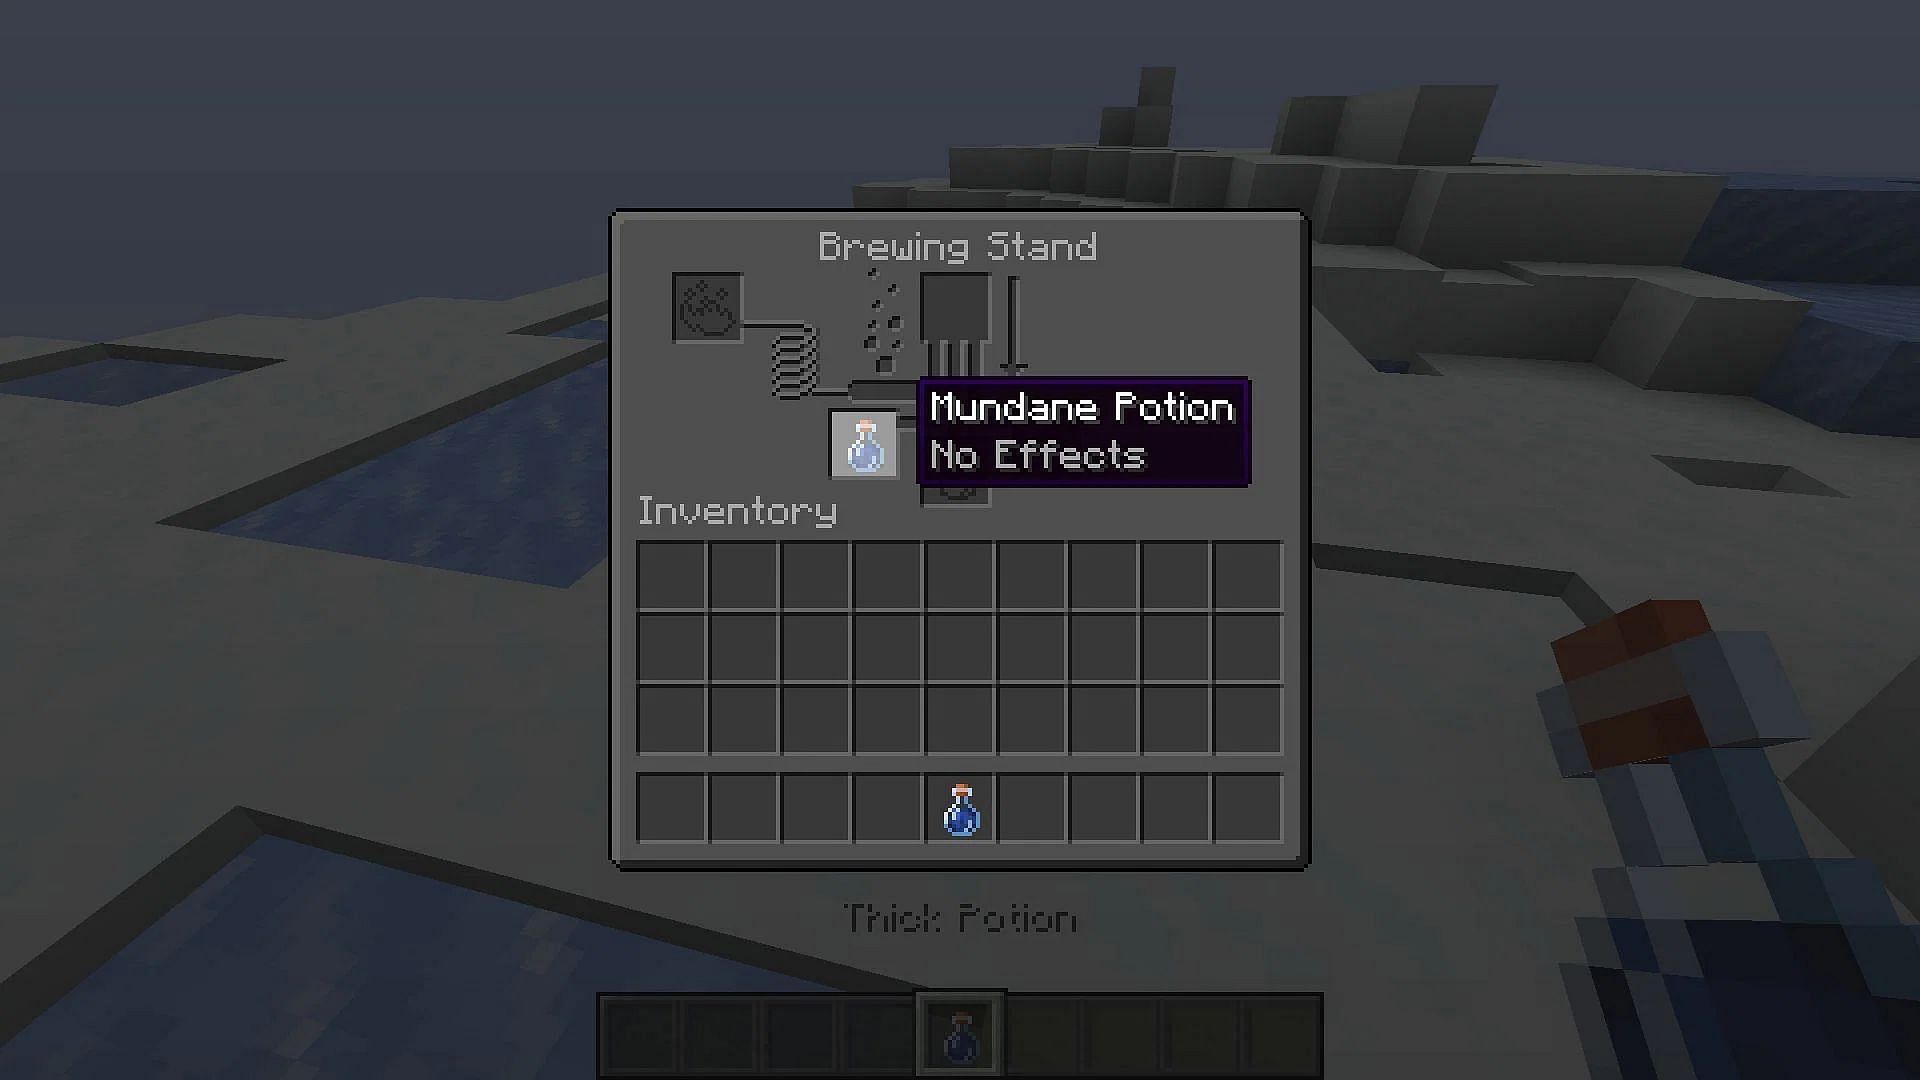 Mundane Potion cannot brew any useful potion in Minecraft (Image via Mojang)